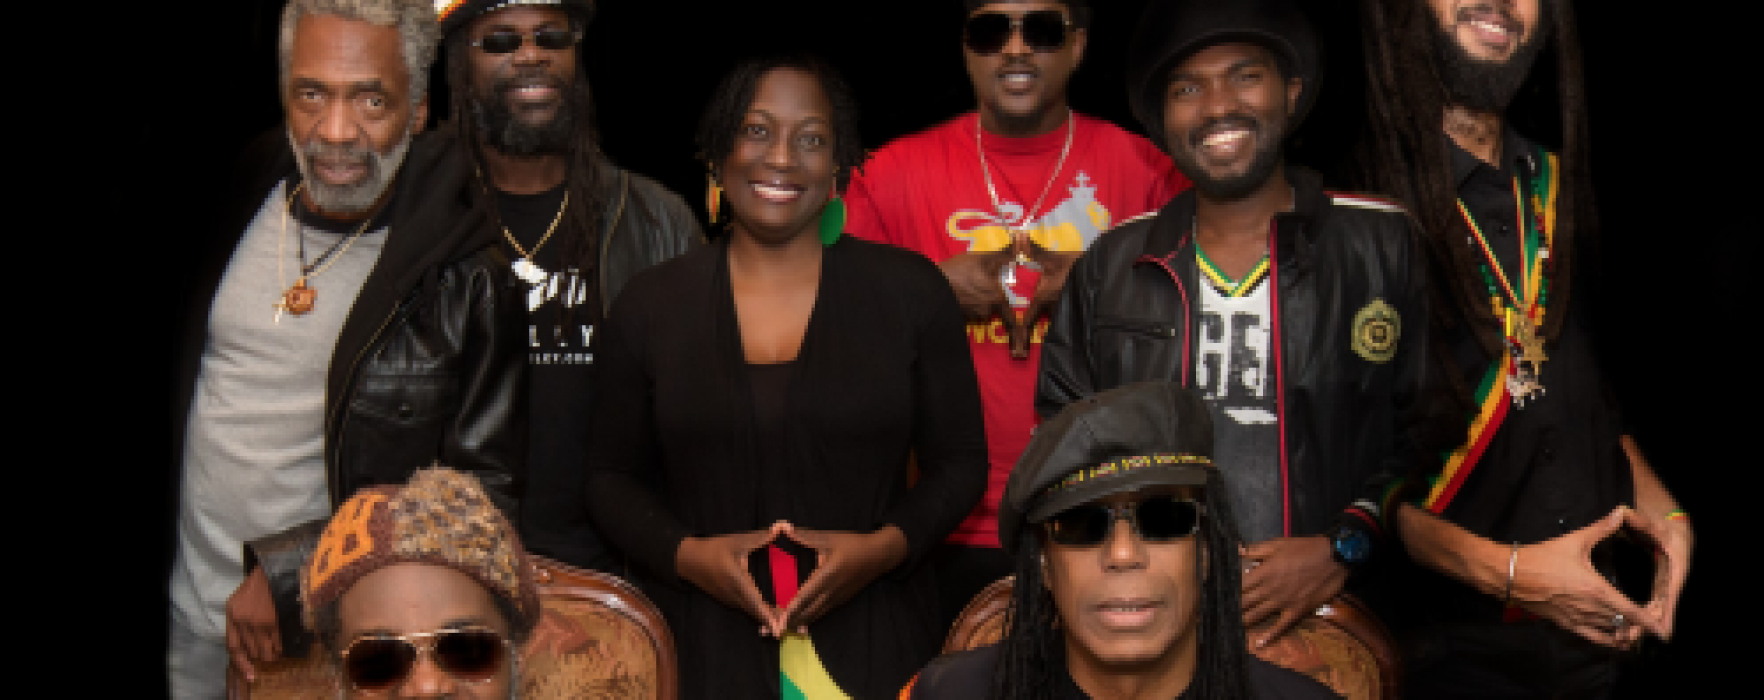 “Keeping the music alive” The Wailers headline UK tour VIVA Lifestyle